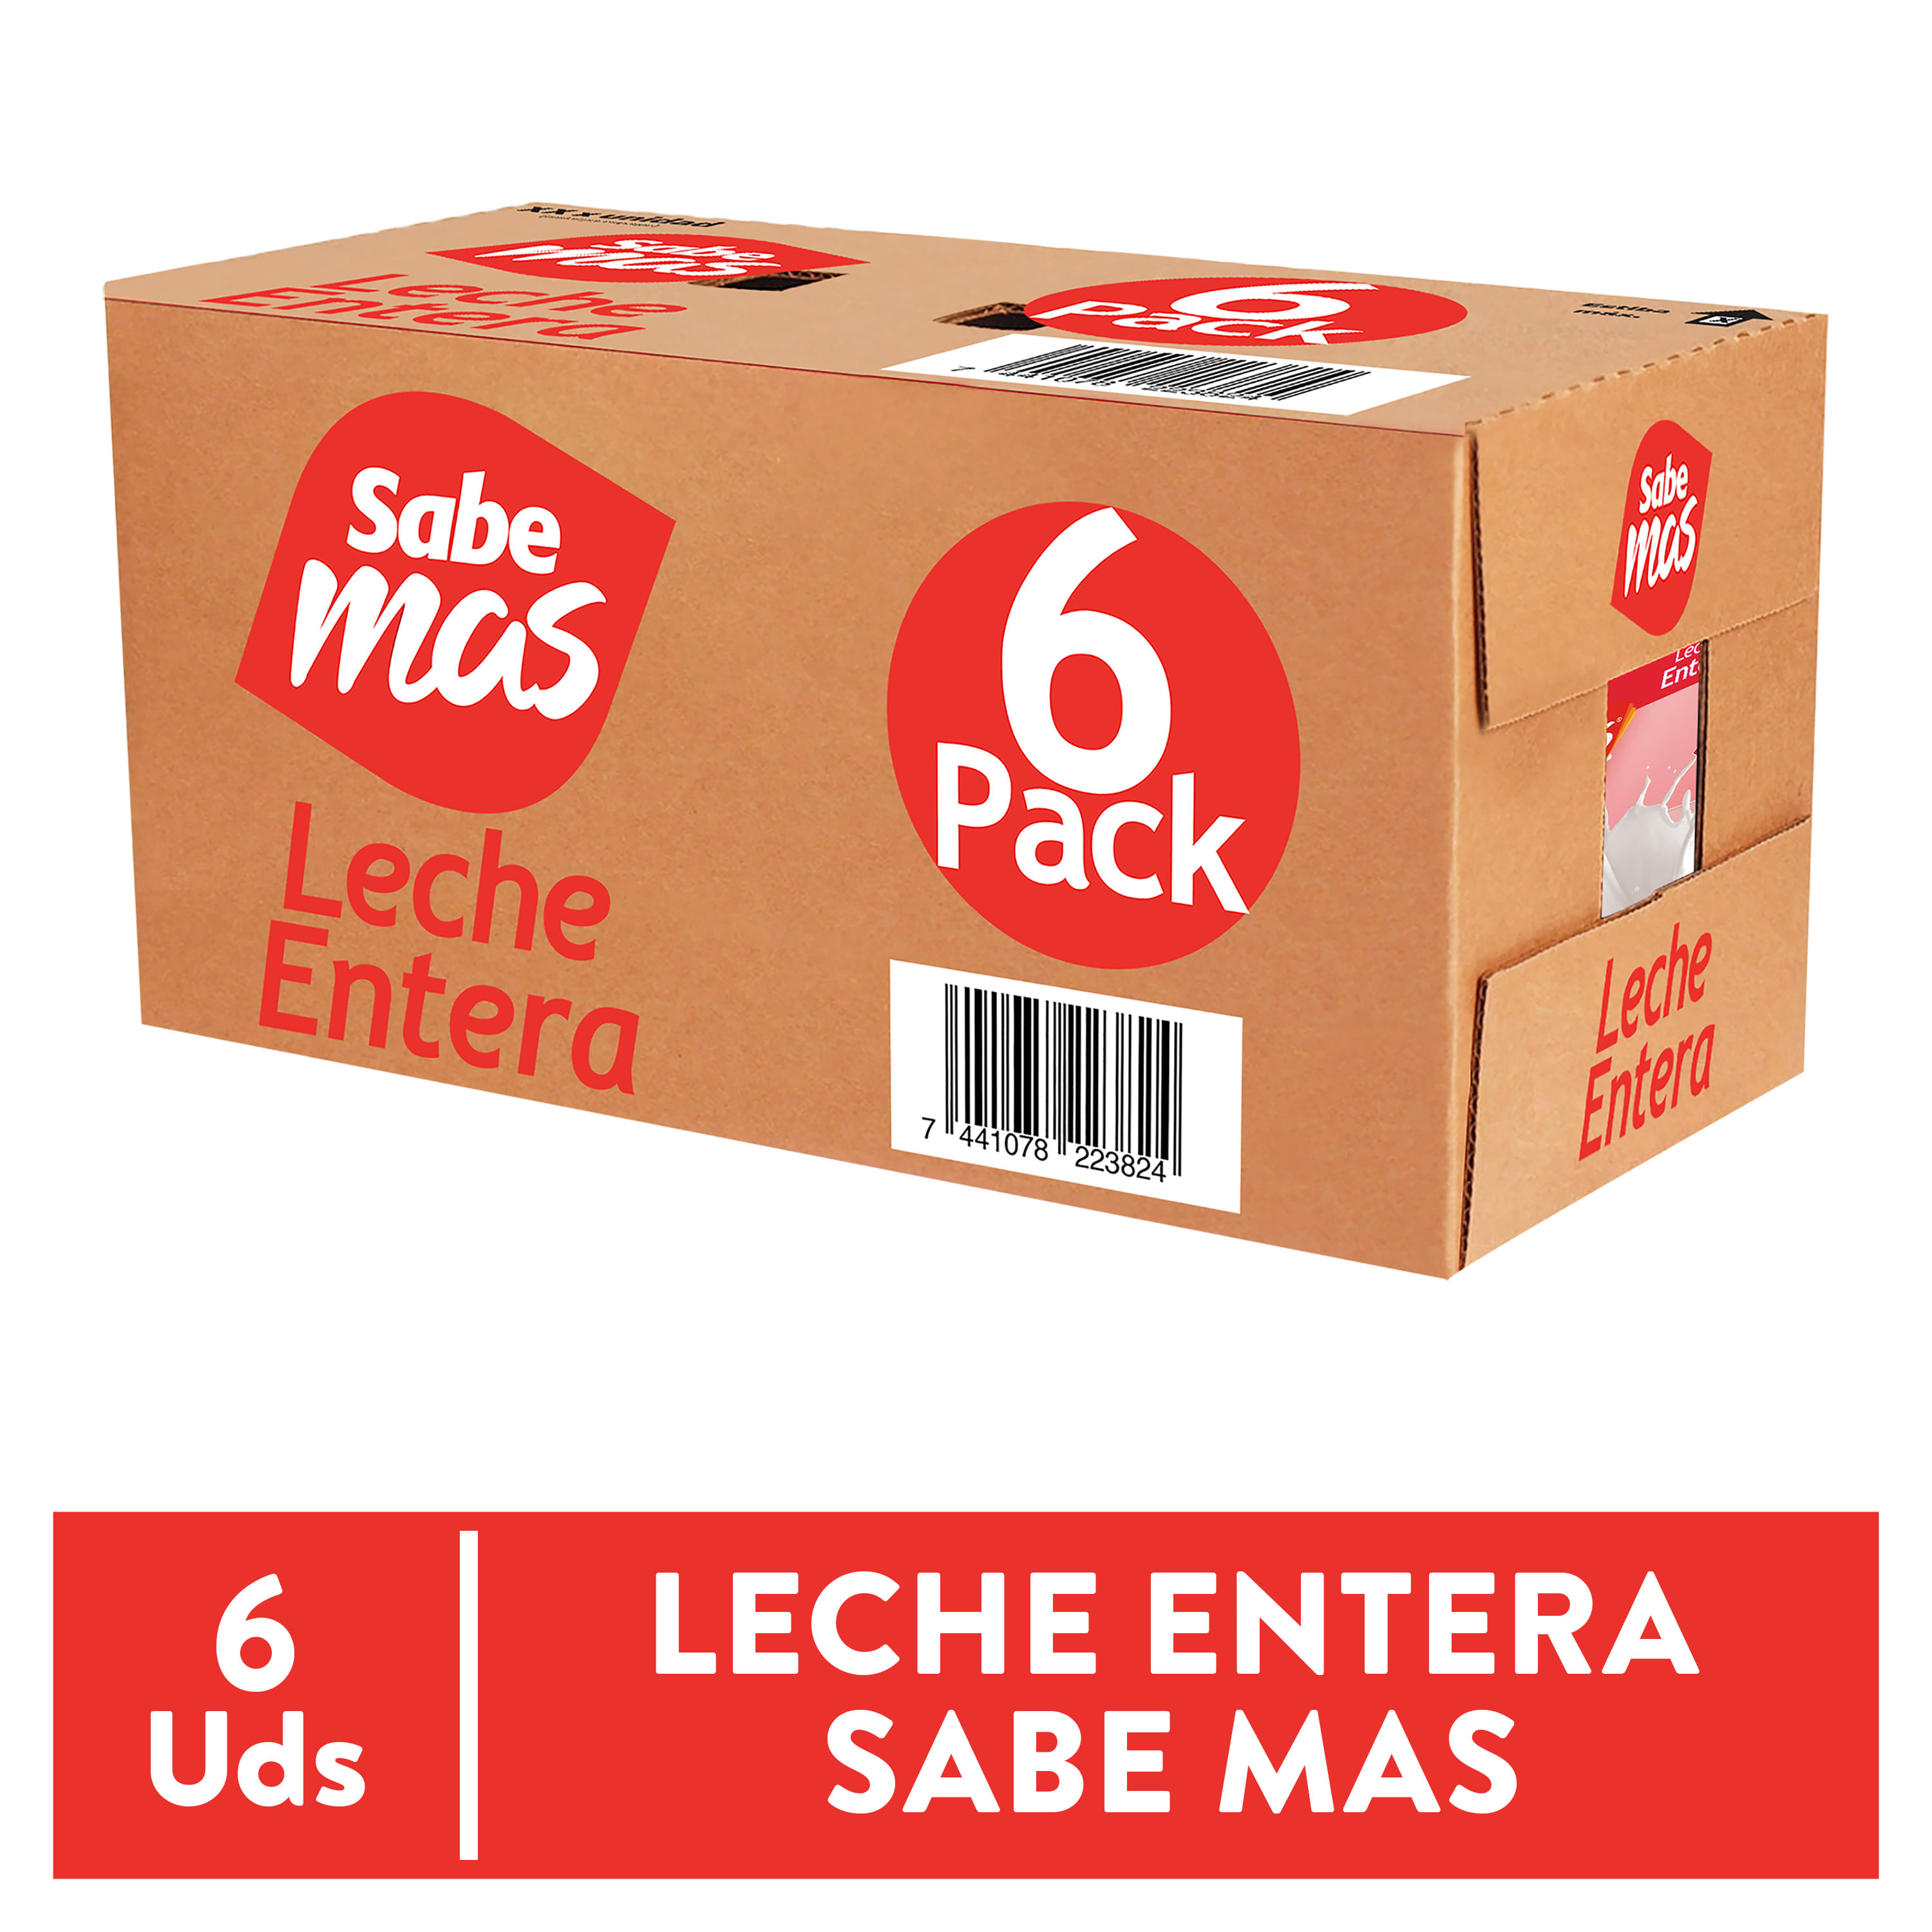 Pack-Leche-Entera-1-8587